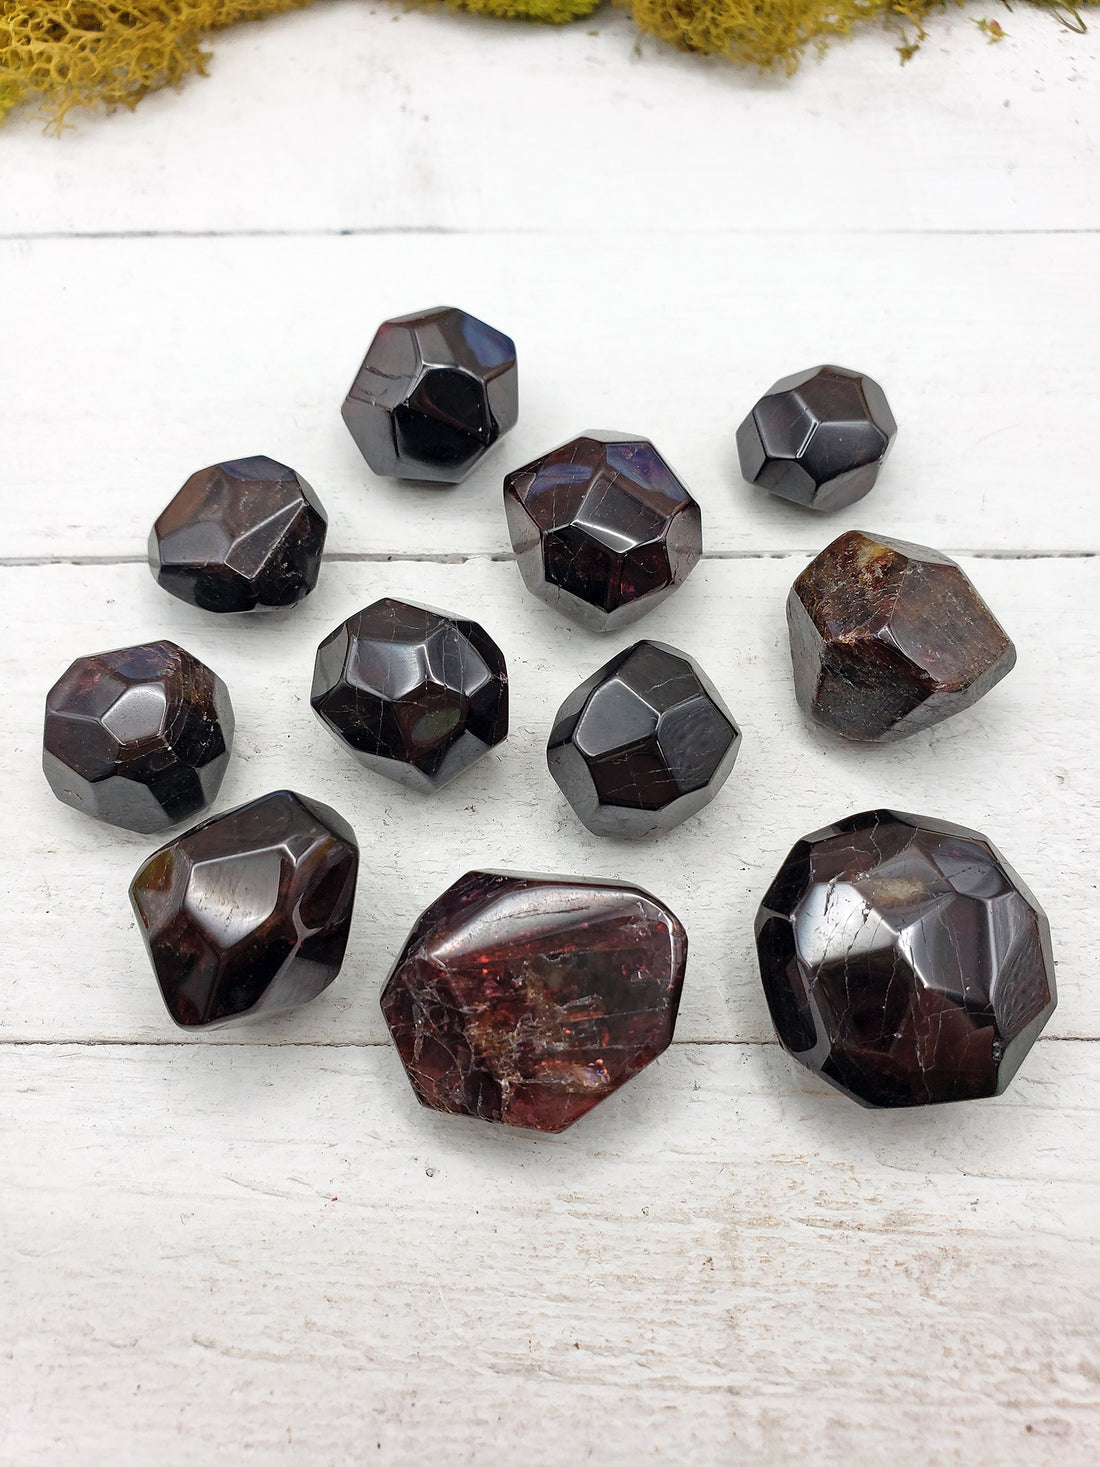 Natural Garnet Stone Jewelry Sets from Black Diamonds New York